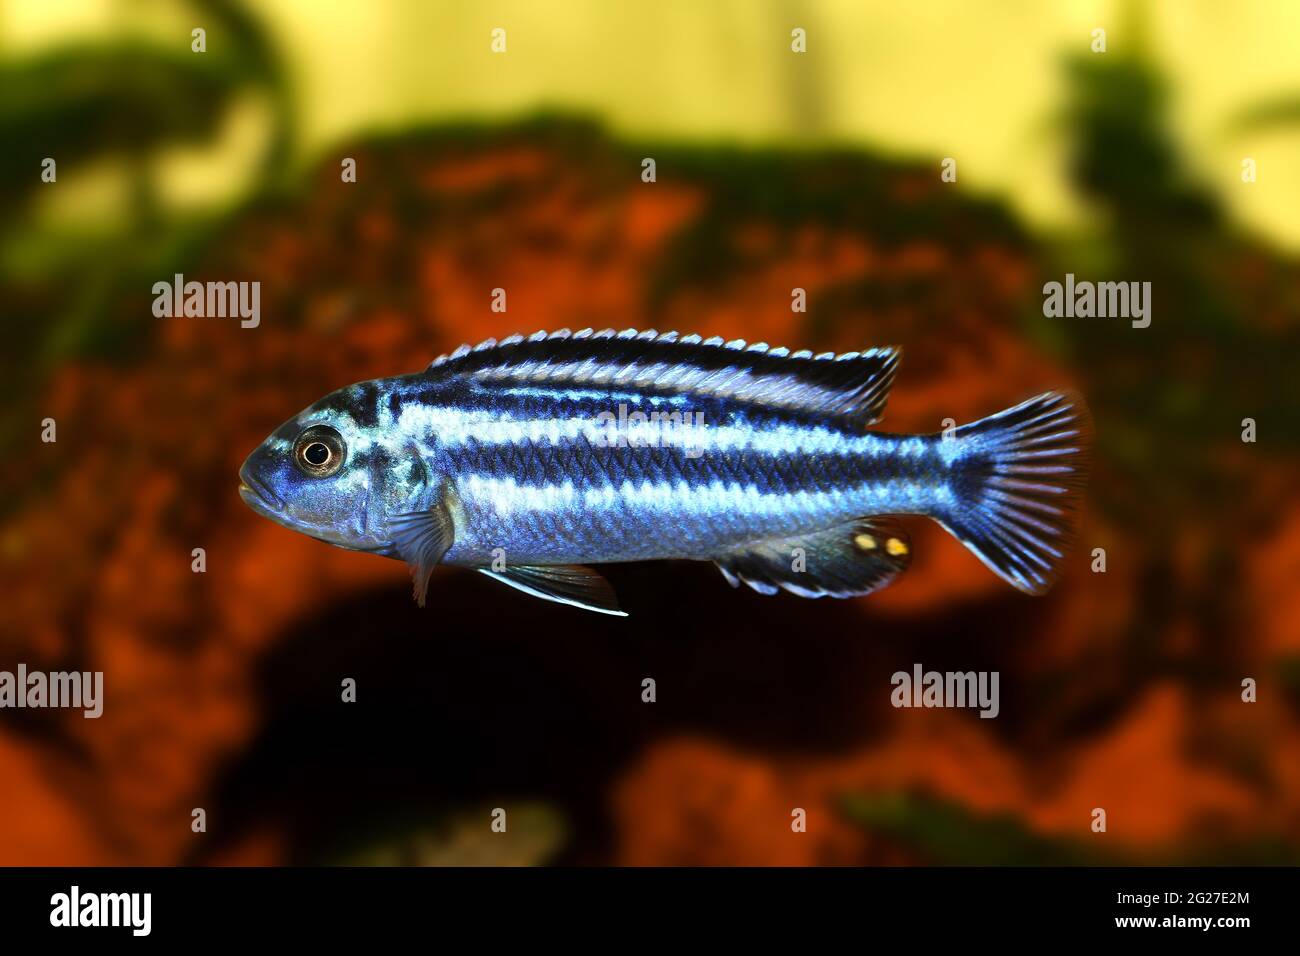 bluegray mbuna malawi cichlid Melanochromis johannii aquarium fish johanni Stock Photo